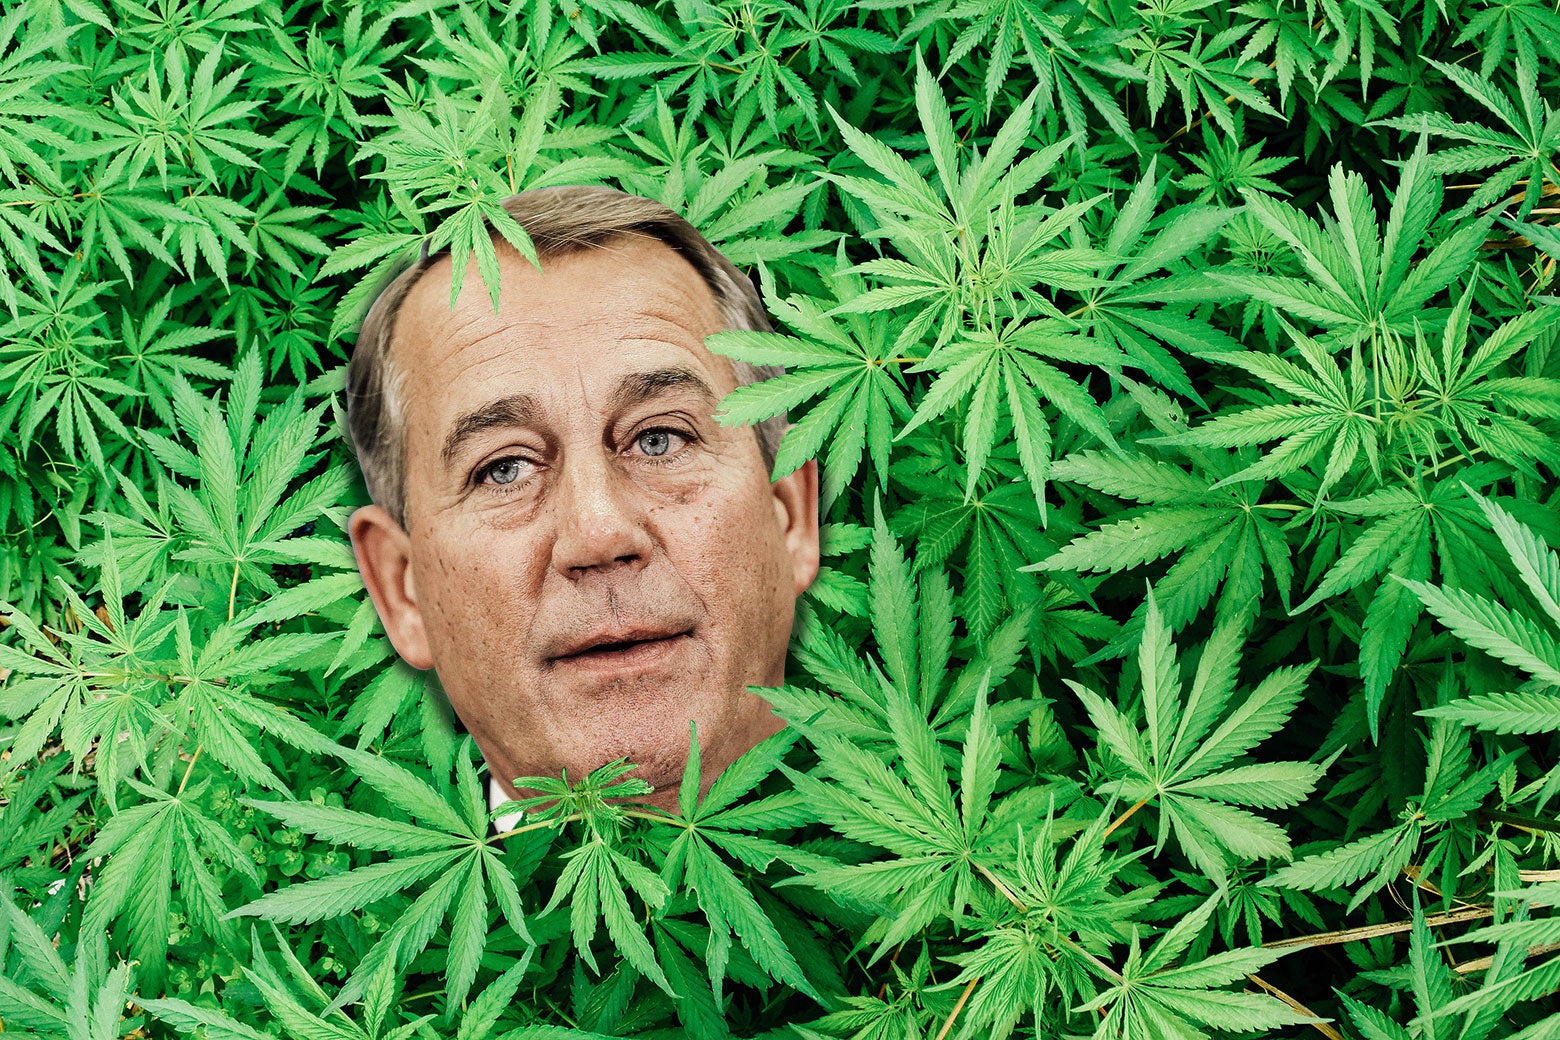 John Boehner's head superimposed on a bunch of marijuana plants.